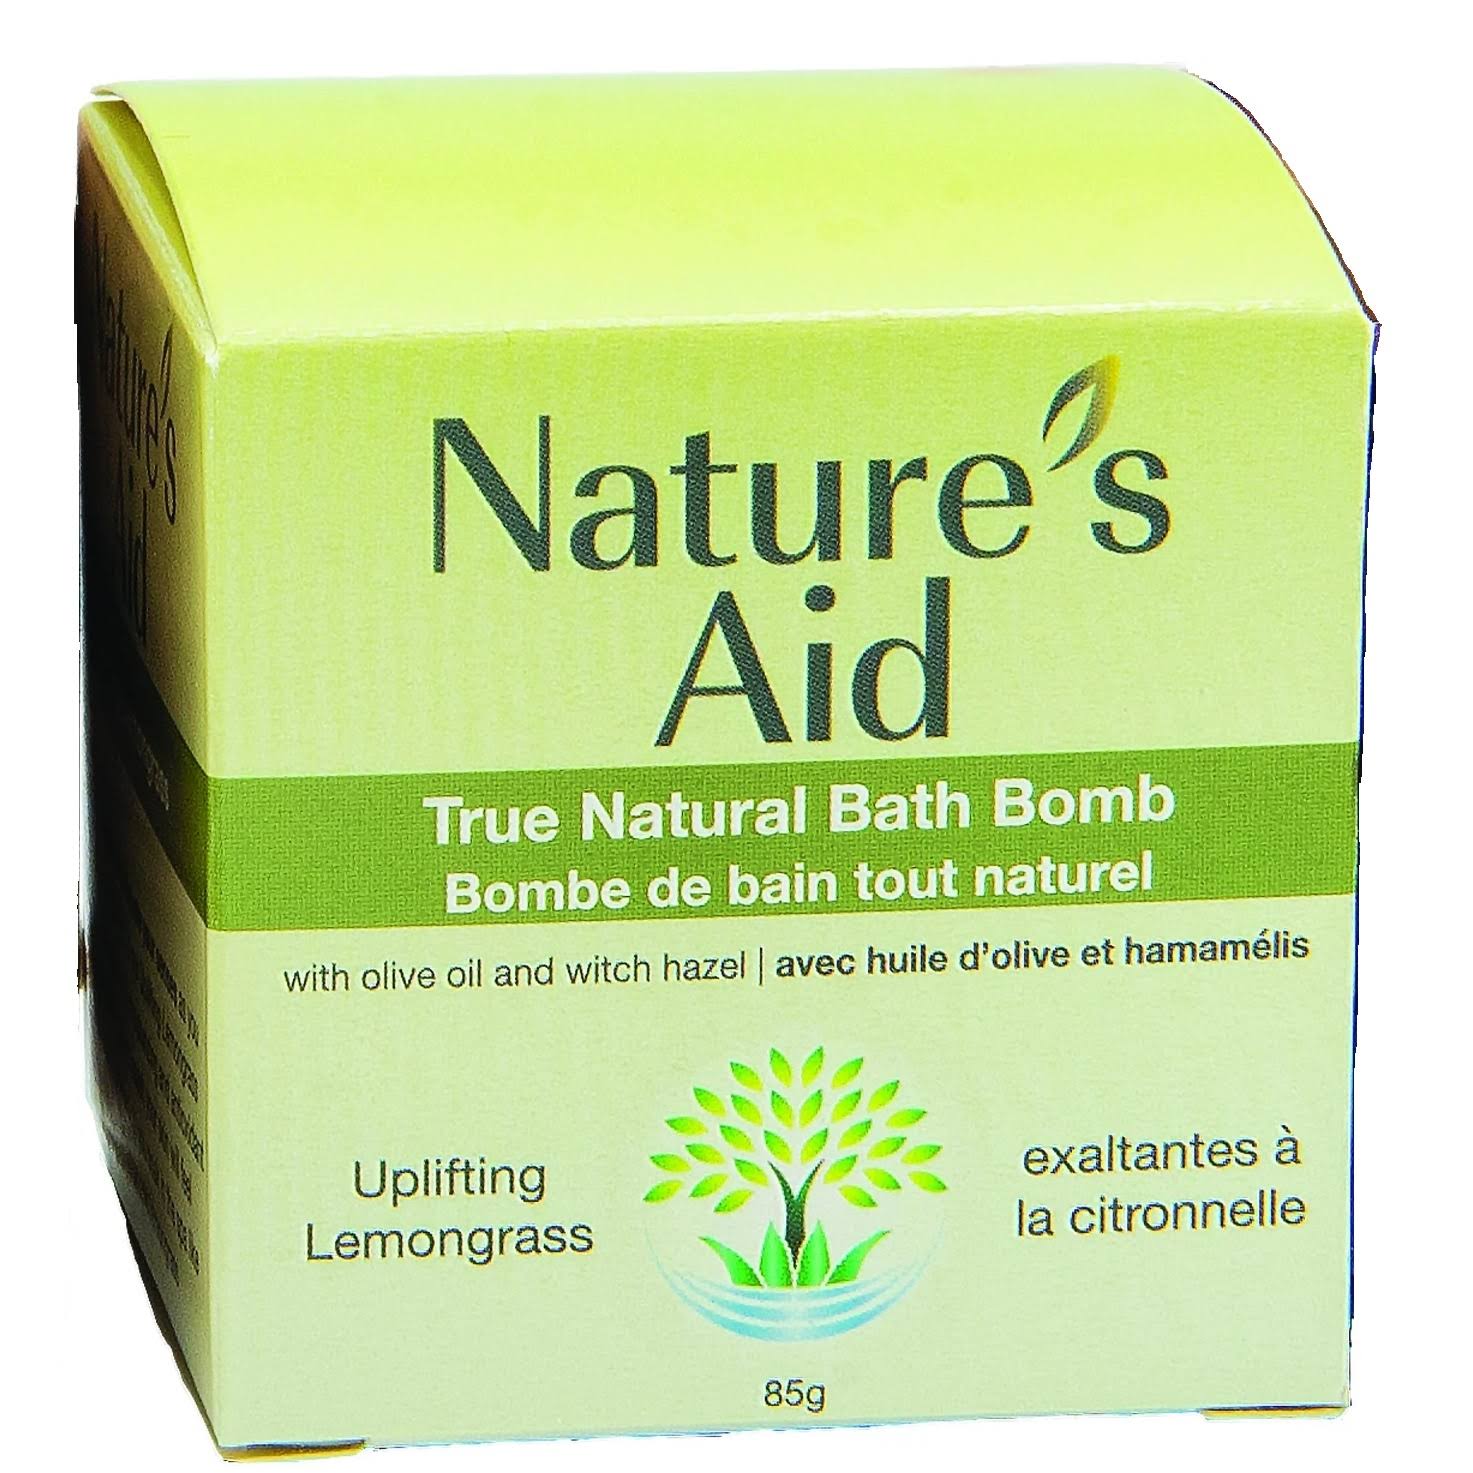 Nature's Aid True Natural Bath Bomb Uplifting Lemongrass 85g